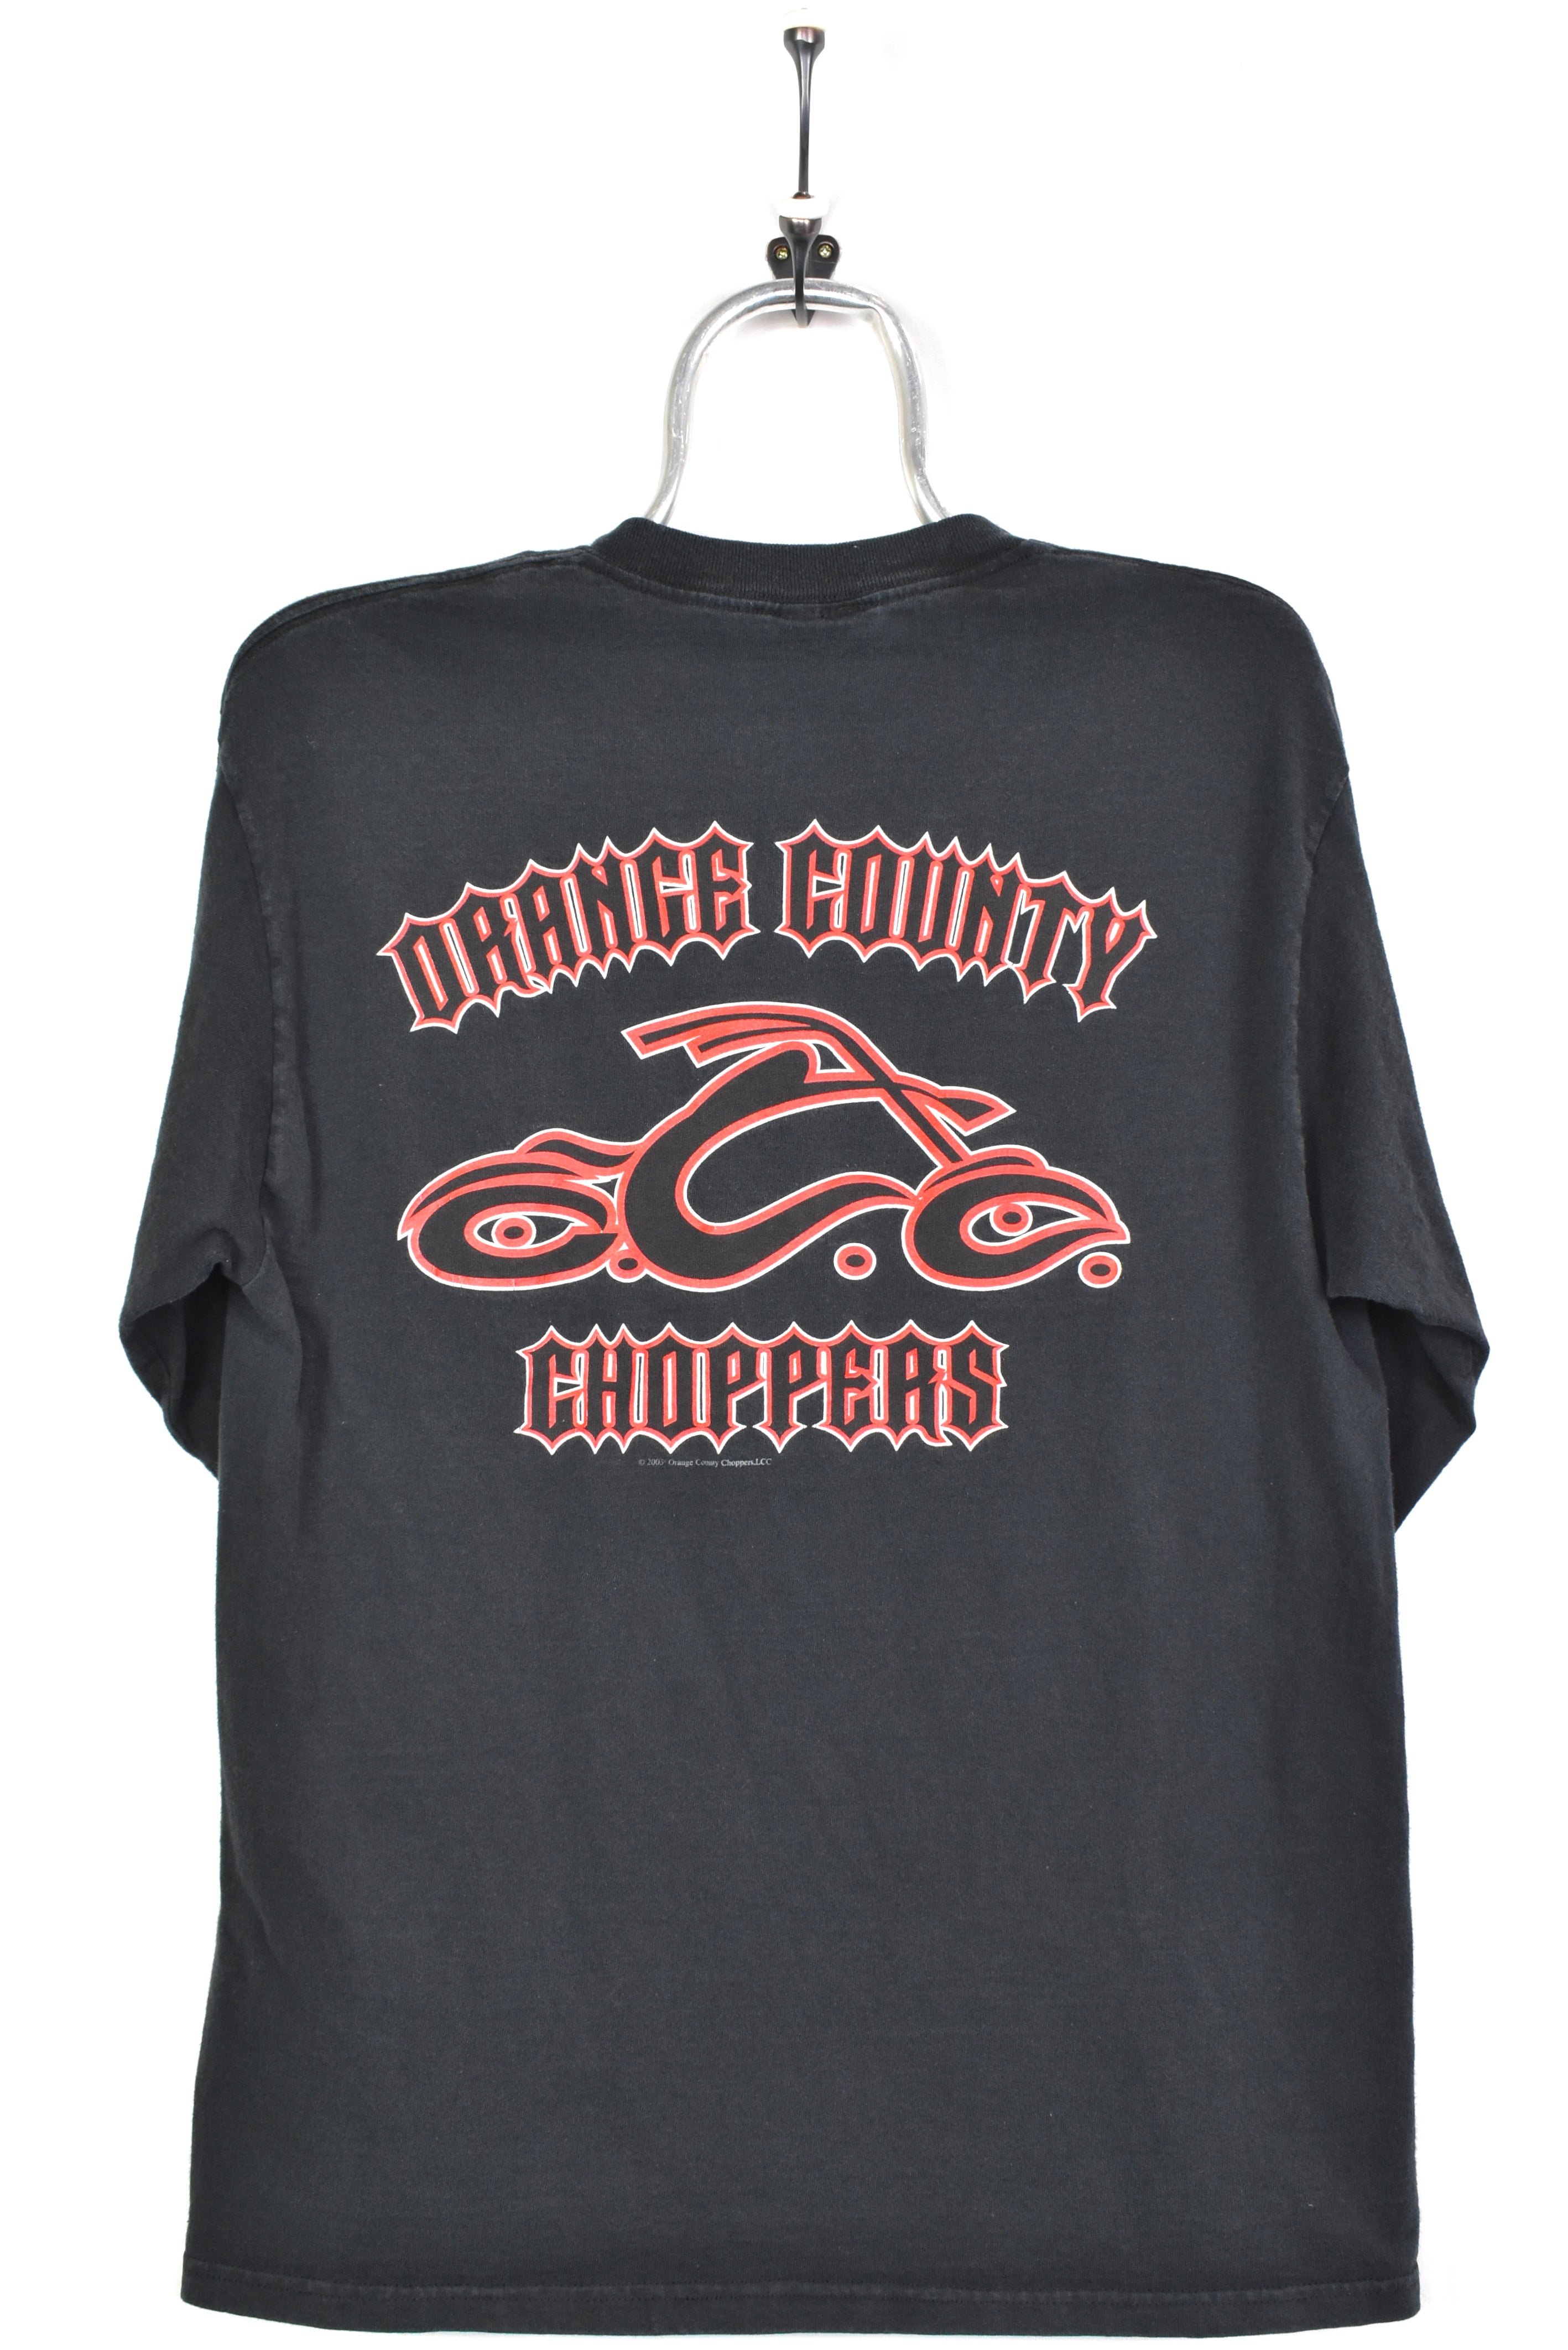 Vintage Orange County Choppers shirt, motorcycle biker long sleeve tee - small, black HARLEY DAVIDSON